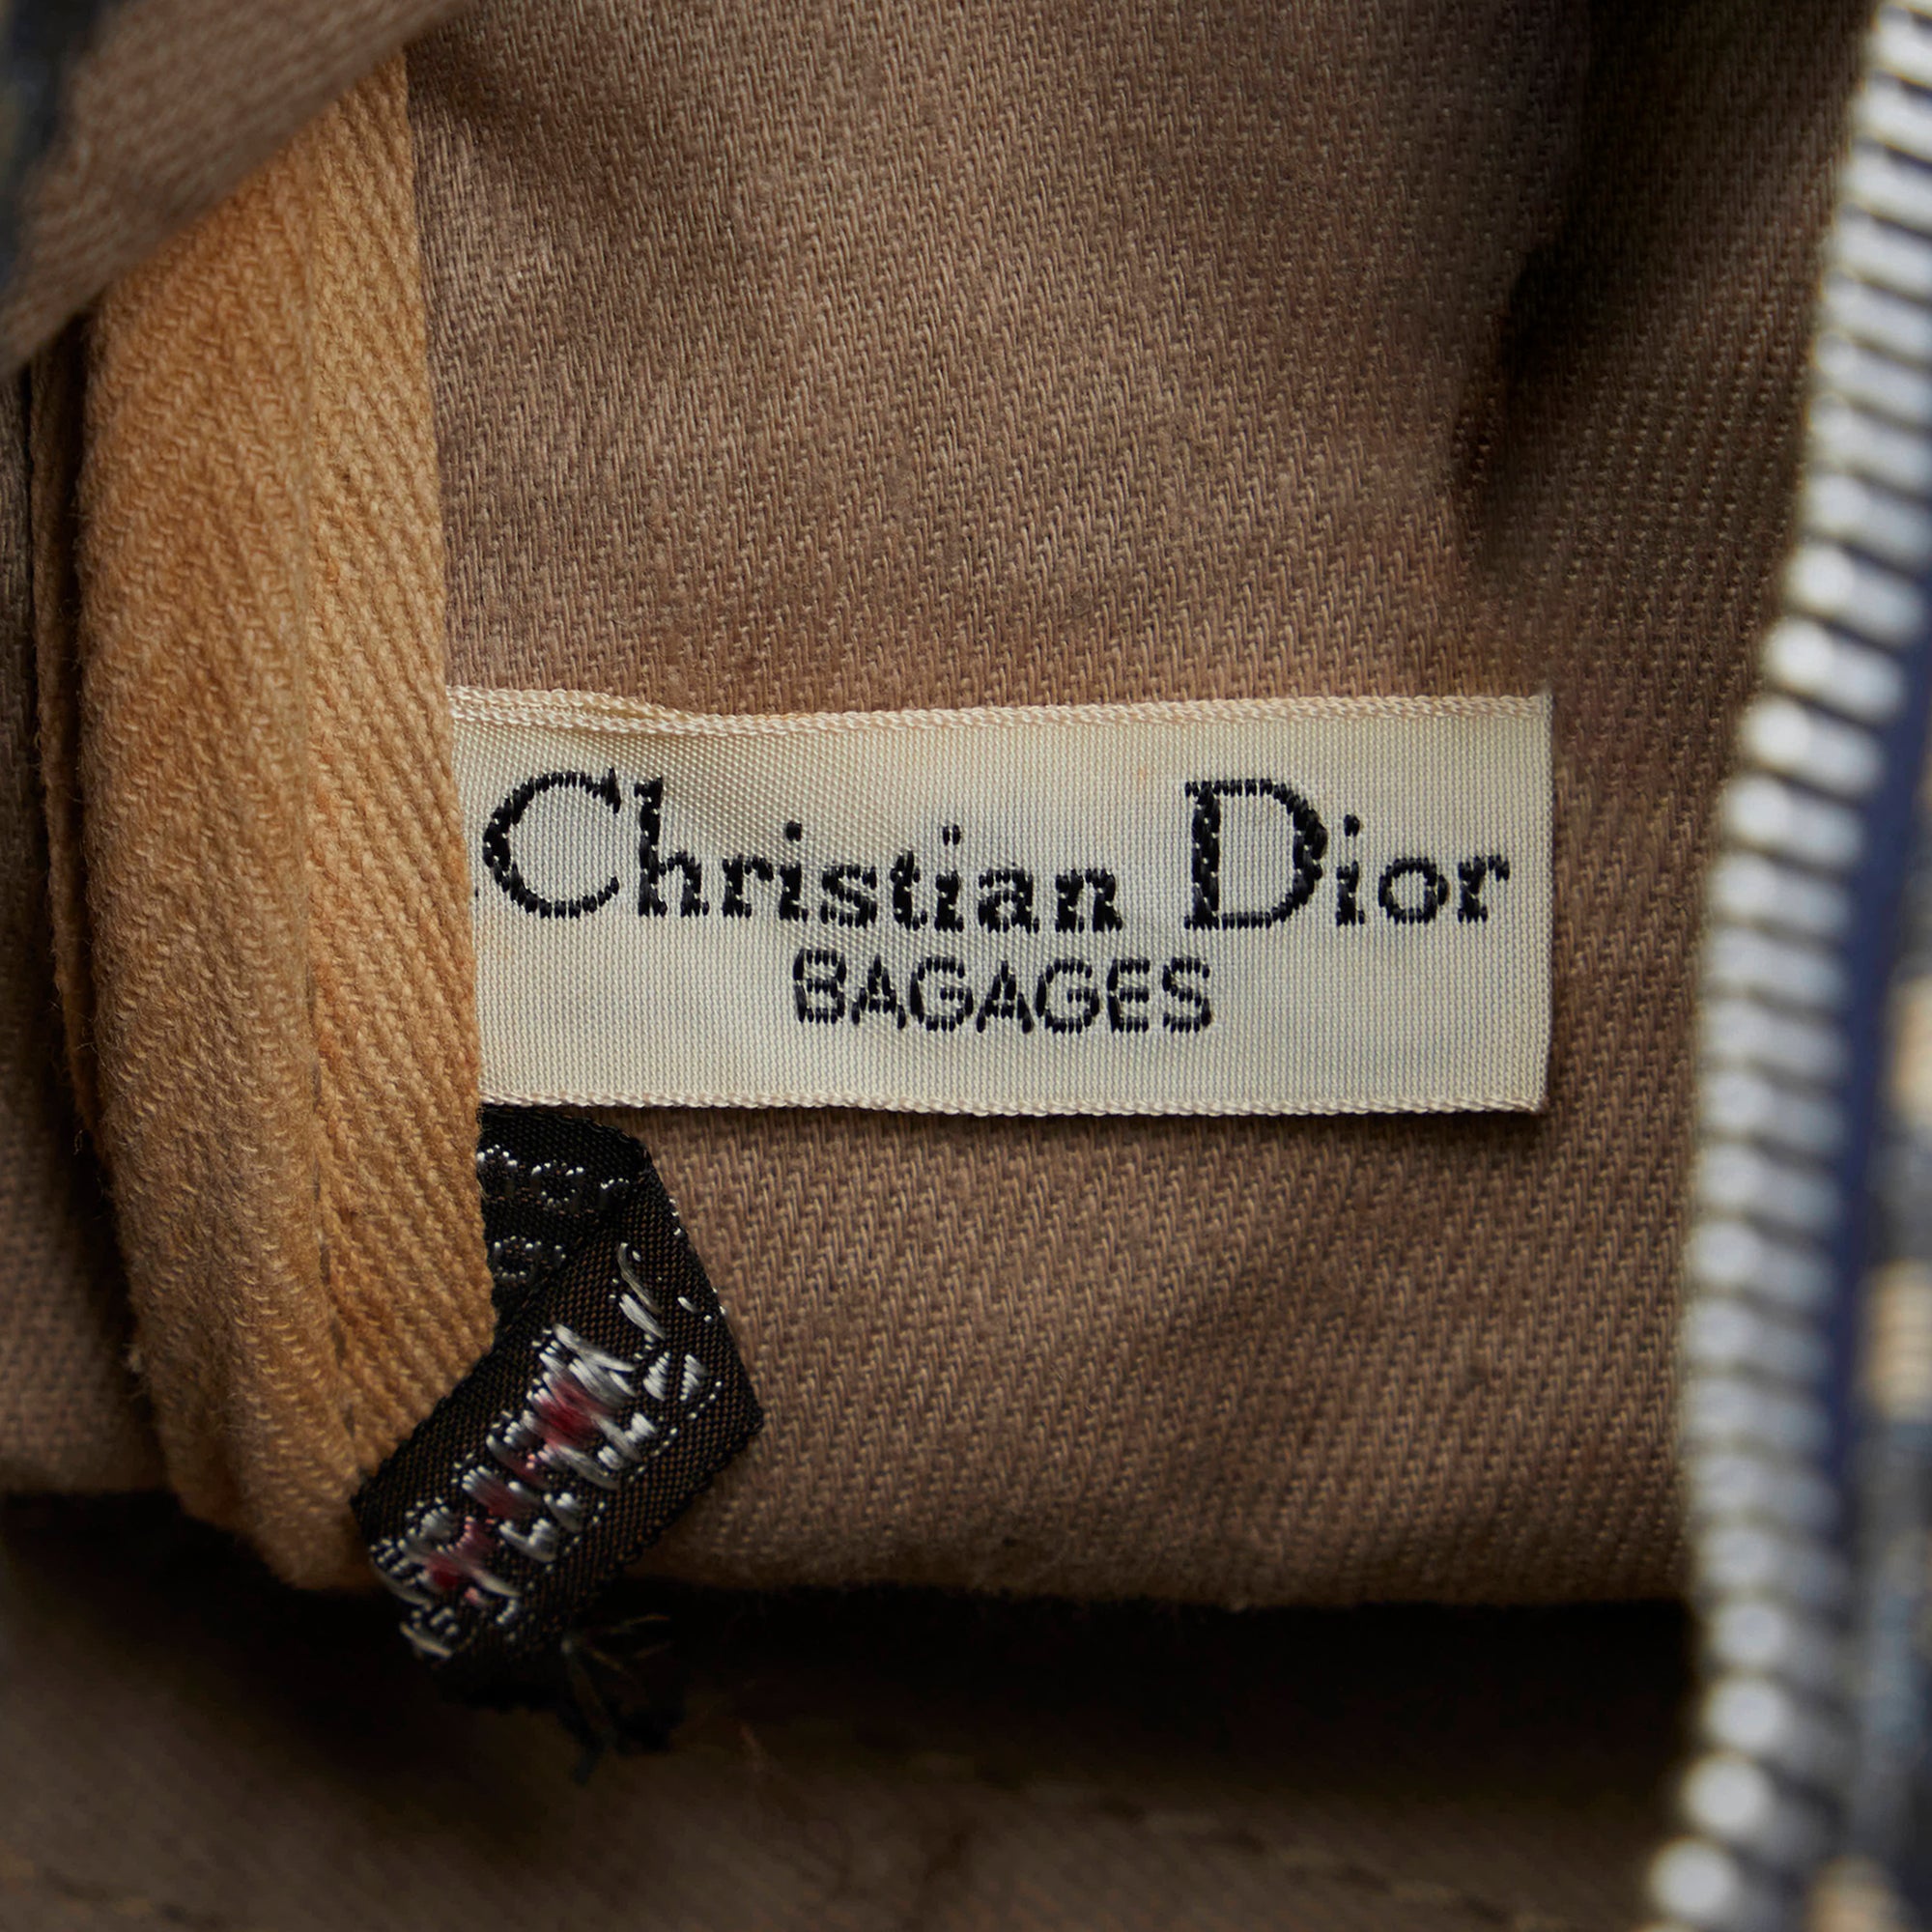 Blue Dior Oblique Boston Bag, RvceShops Revival